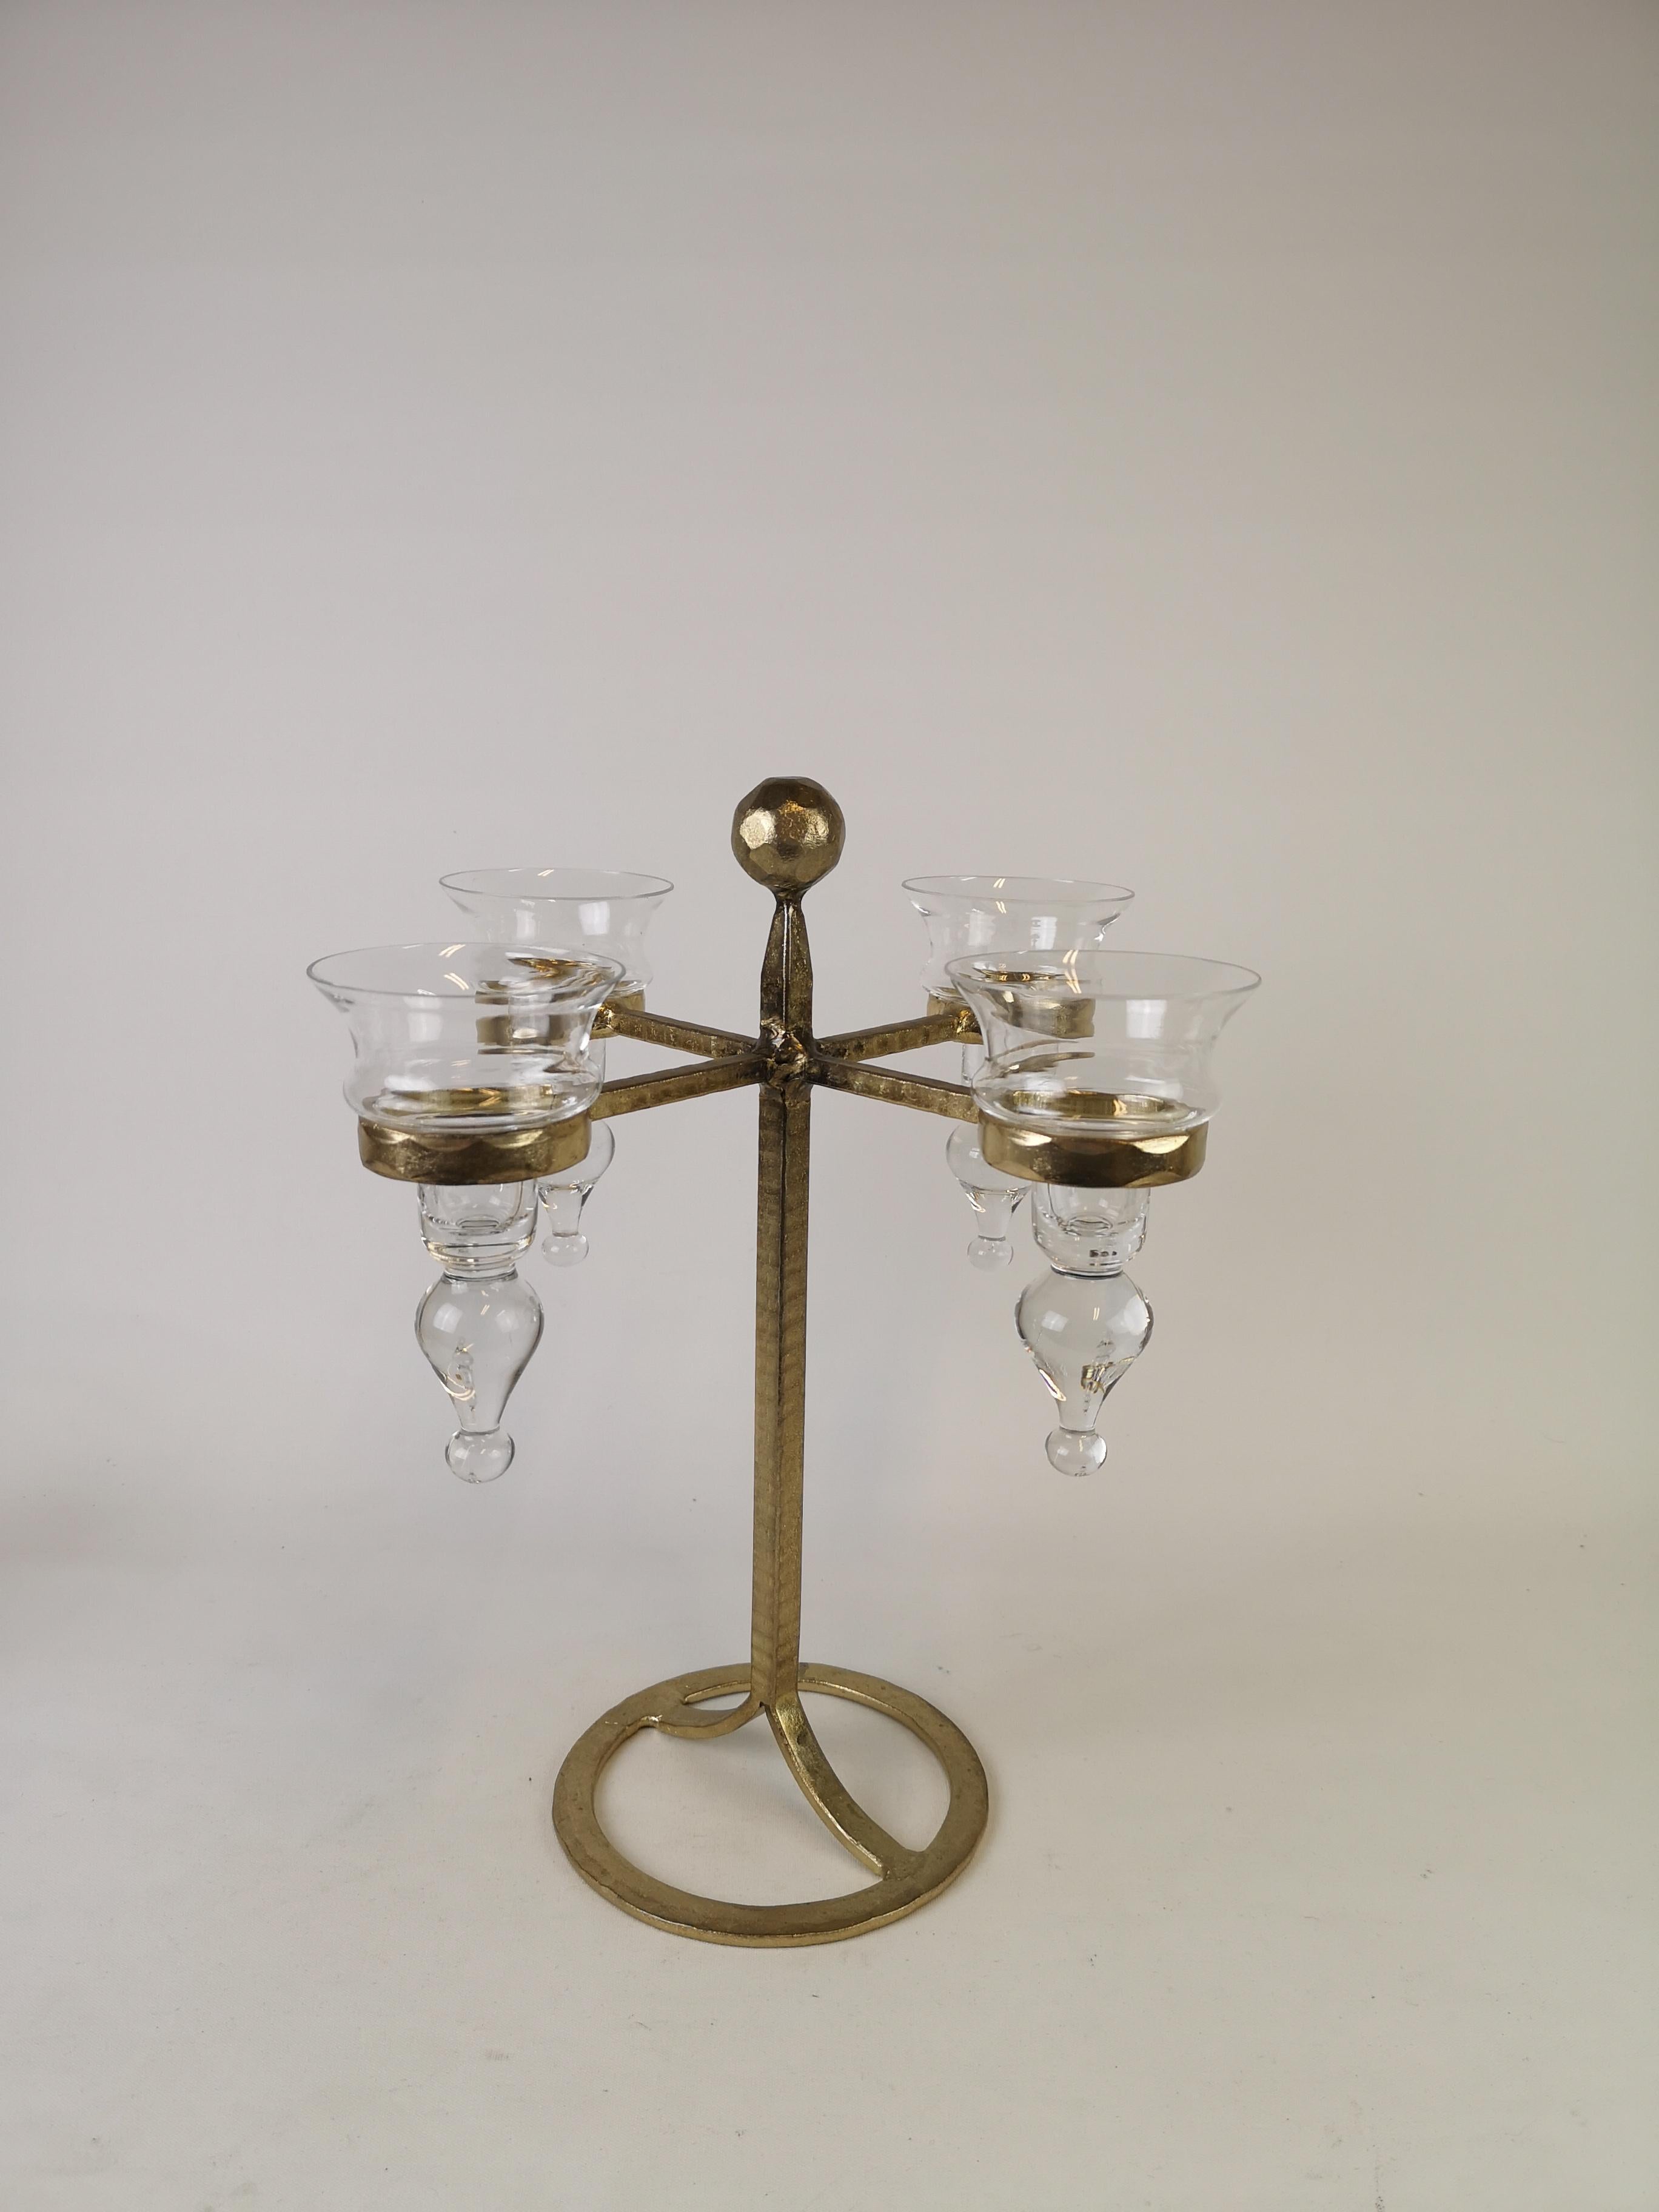 Table candelabra designed by Bertil Vallien. Produced by Boda Smide in Sweden.

Good condition.

Measures: H 30 cm, D 28 cm.